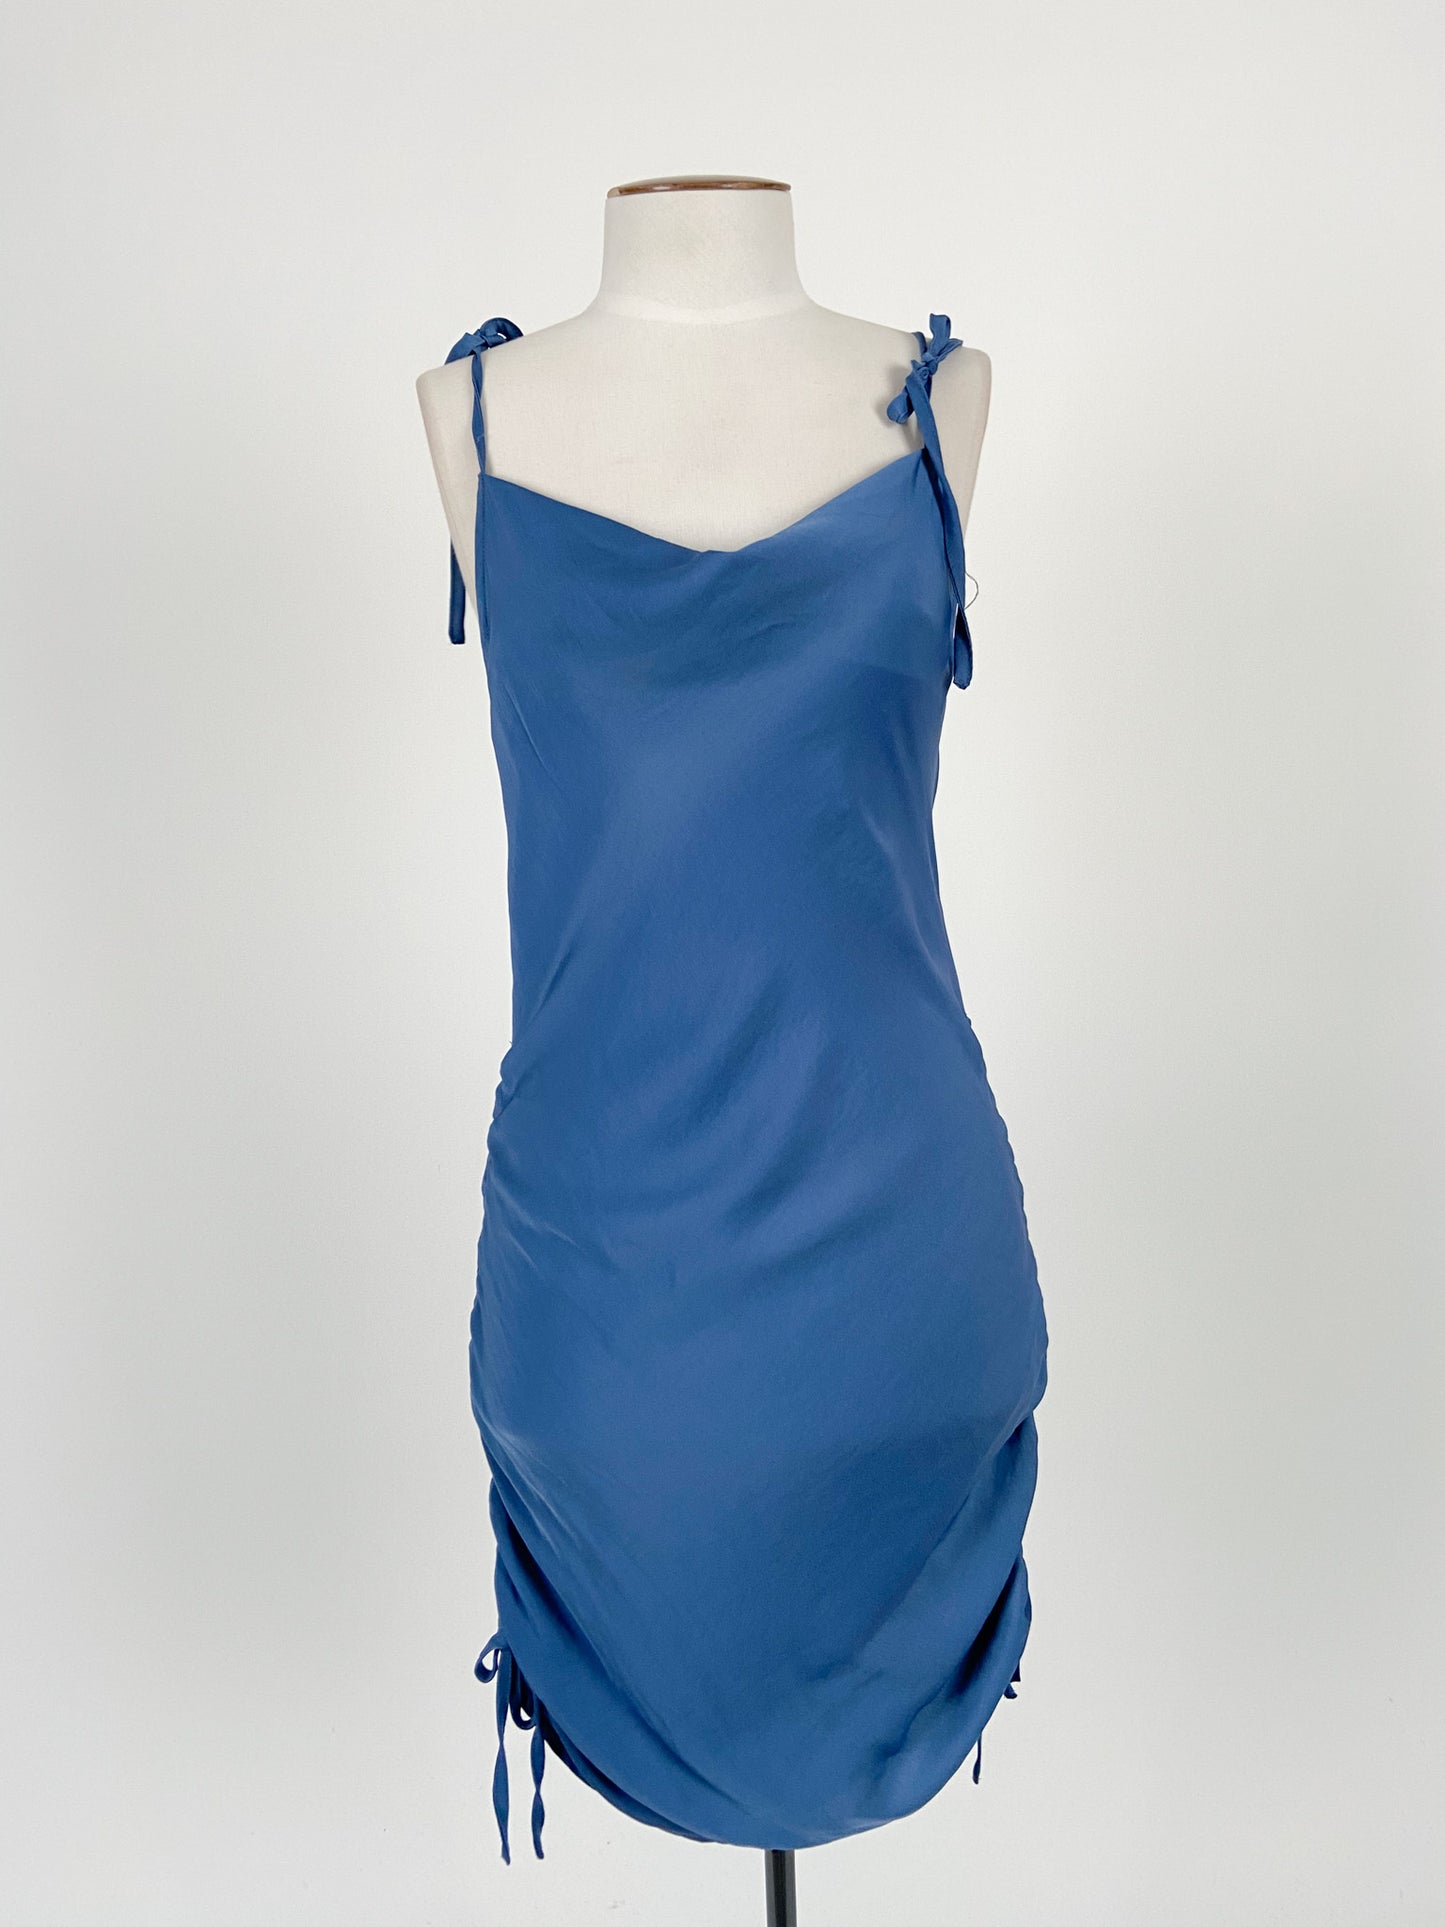 Glassons | Blue Cocktail/Formal Dress | Size 8